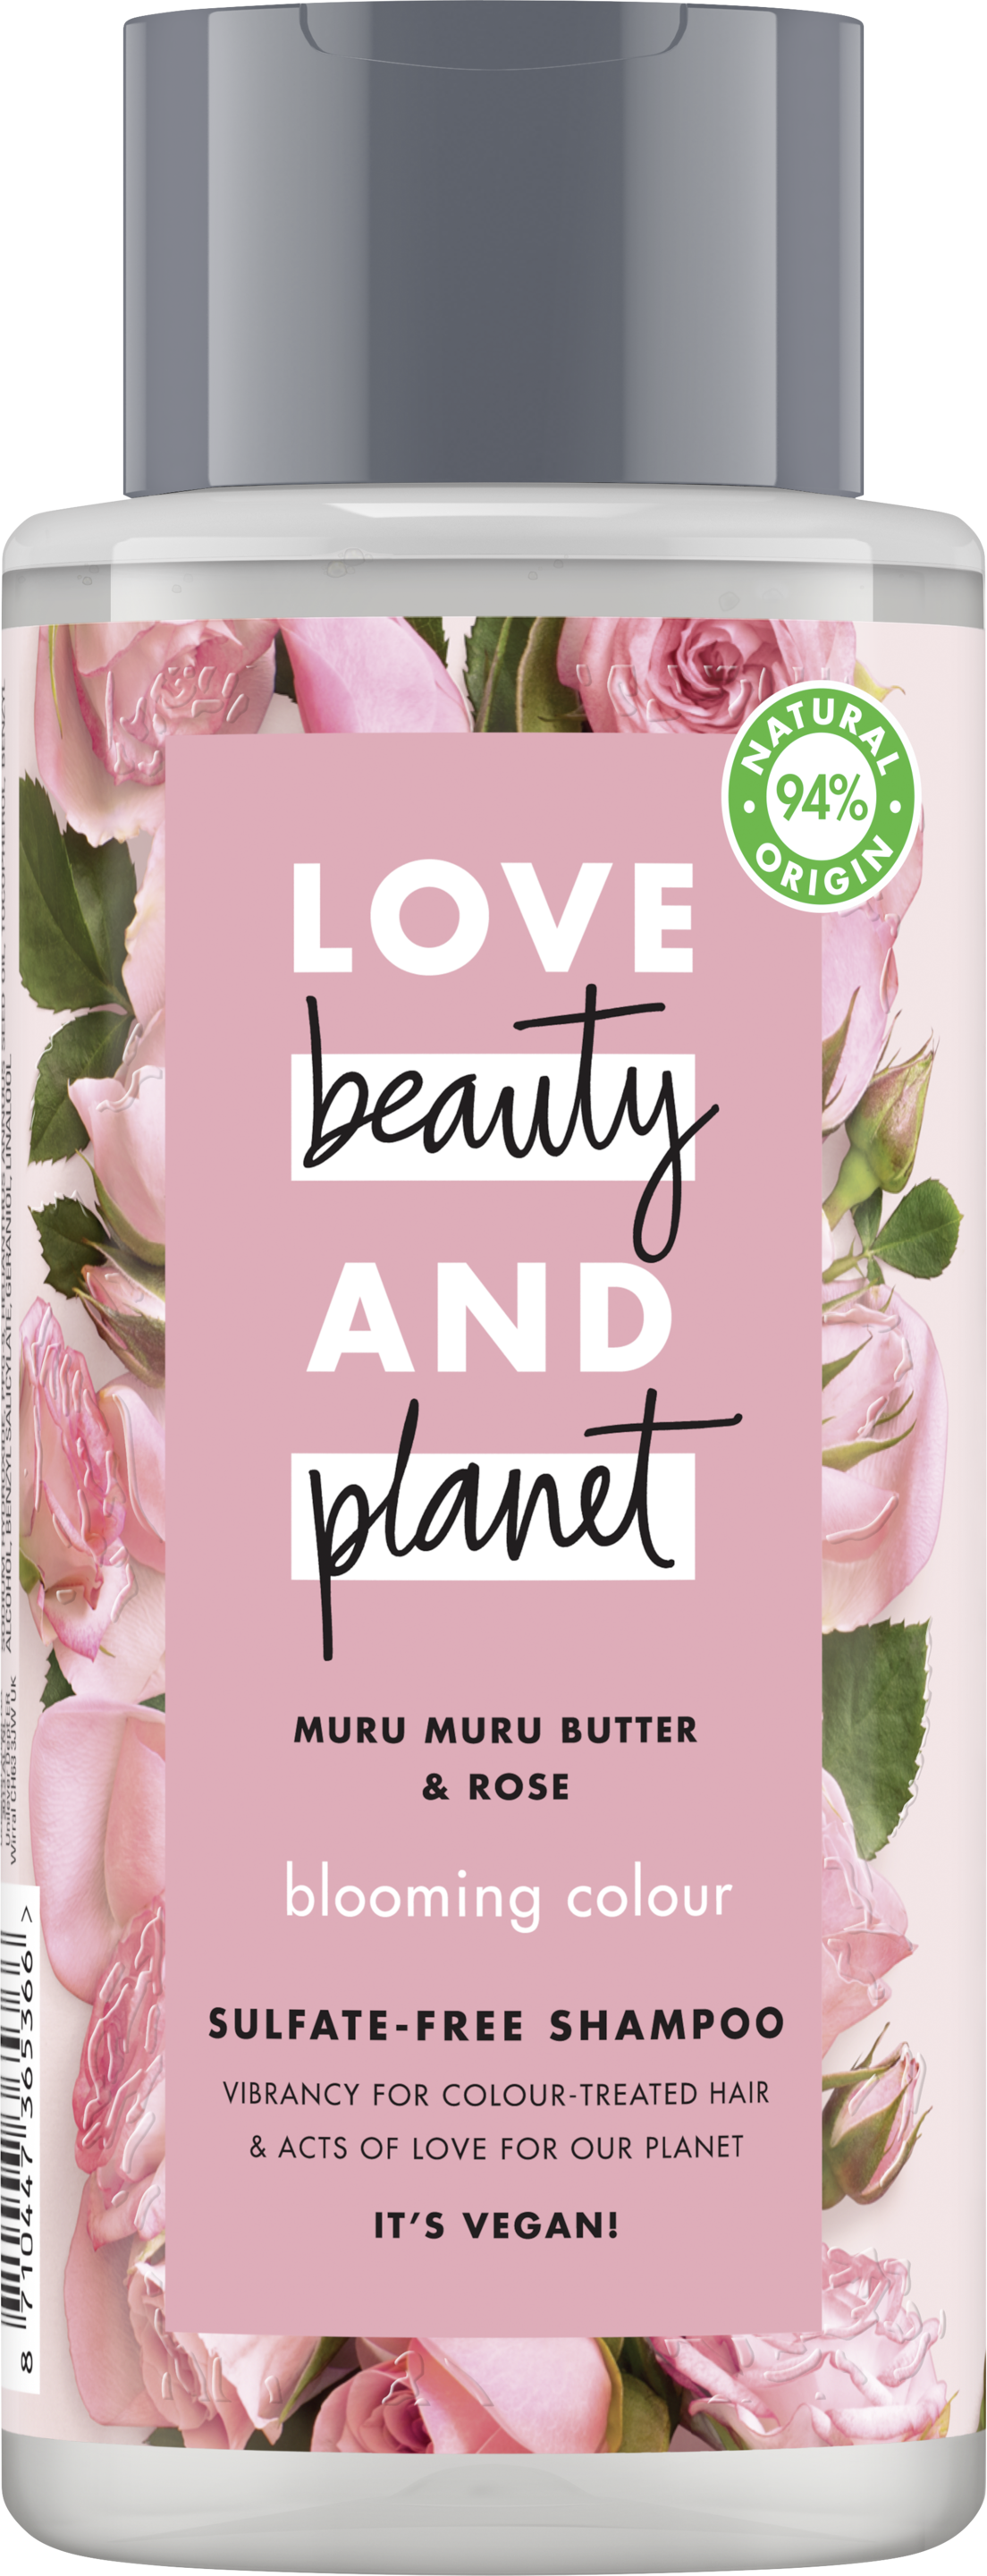 muru muru butter & rose shampoo Text